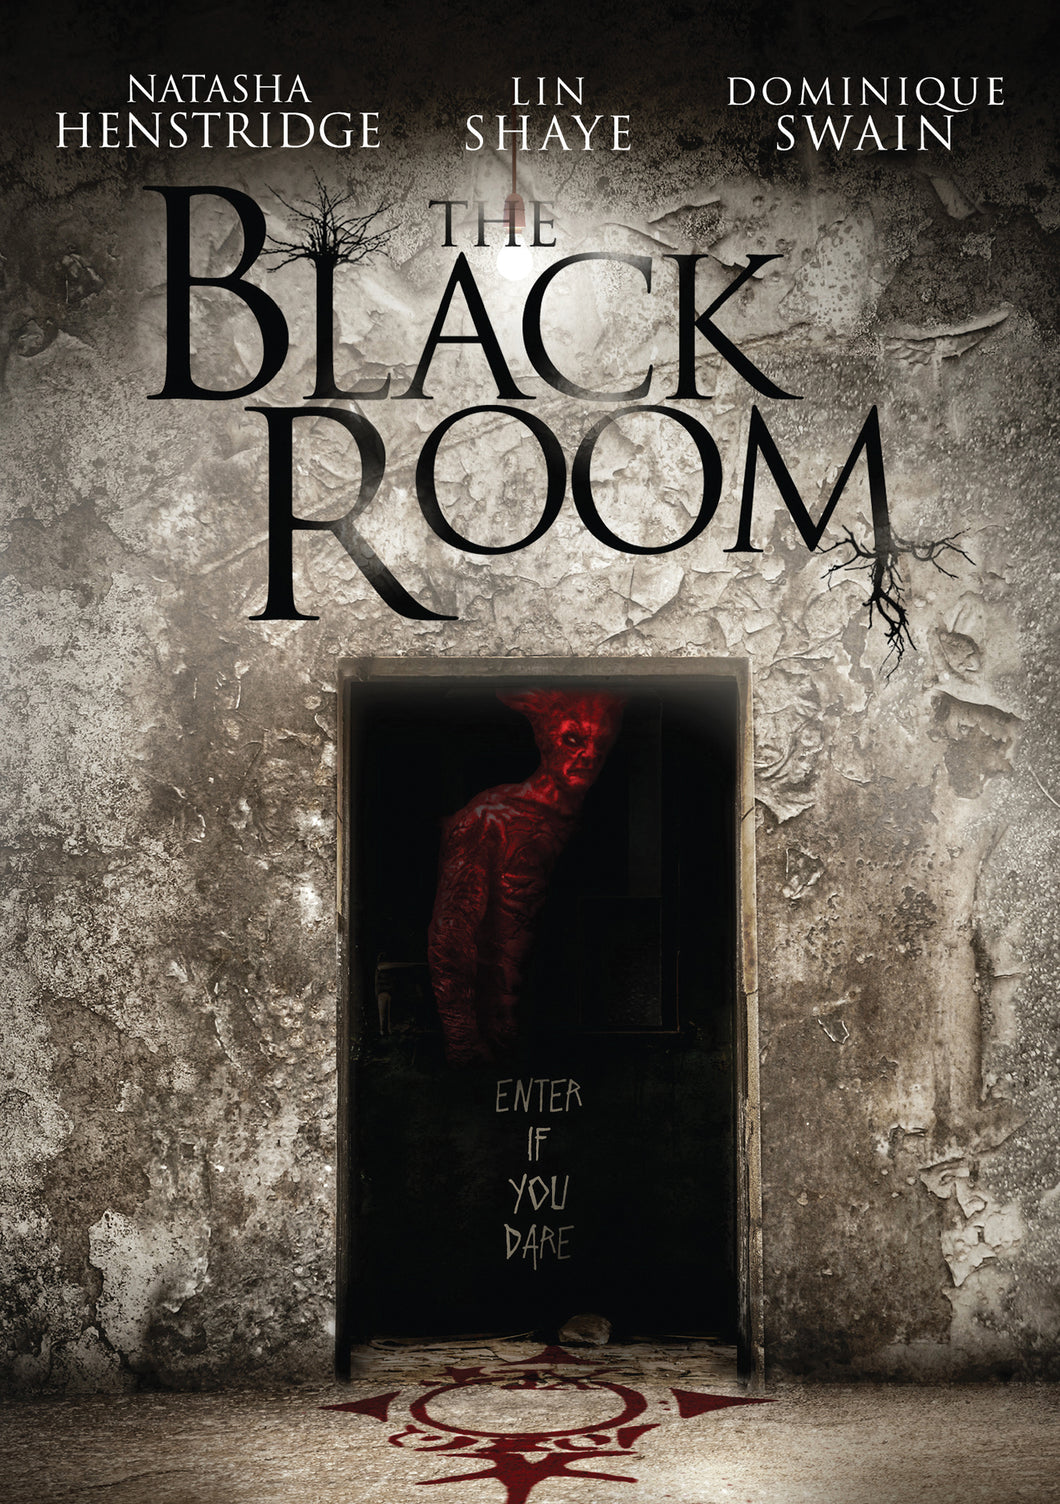 The Black Room (DVD)